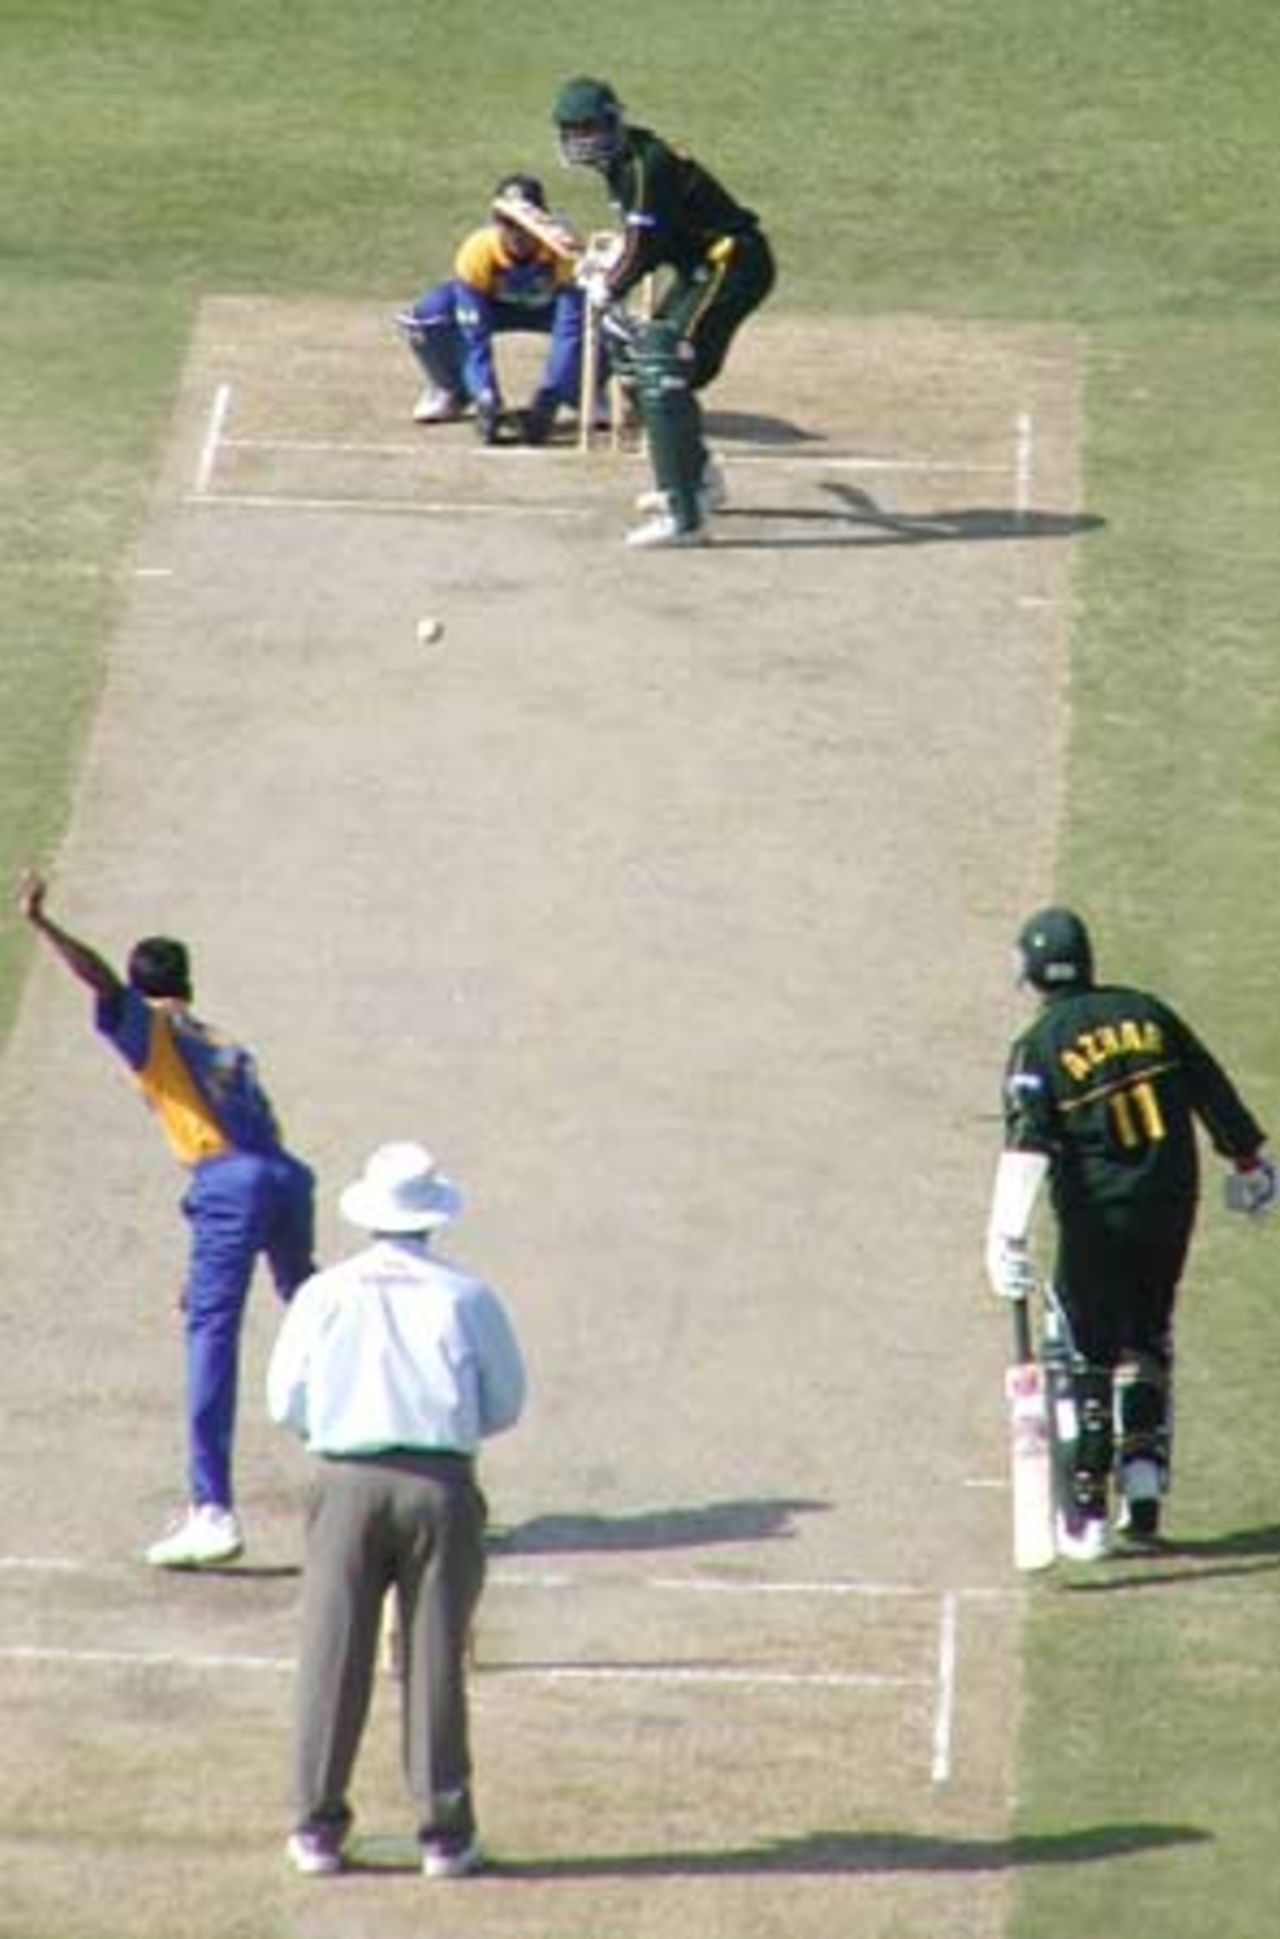 Chandana bowling to Razzaq, Morocco Cup, 4th ODI at Tangiers, Pakistan v Sri Lanka, 17 Aug 2002